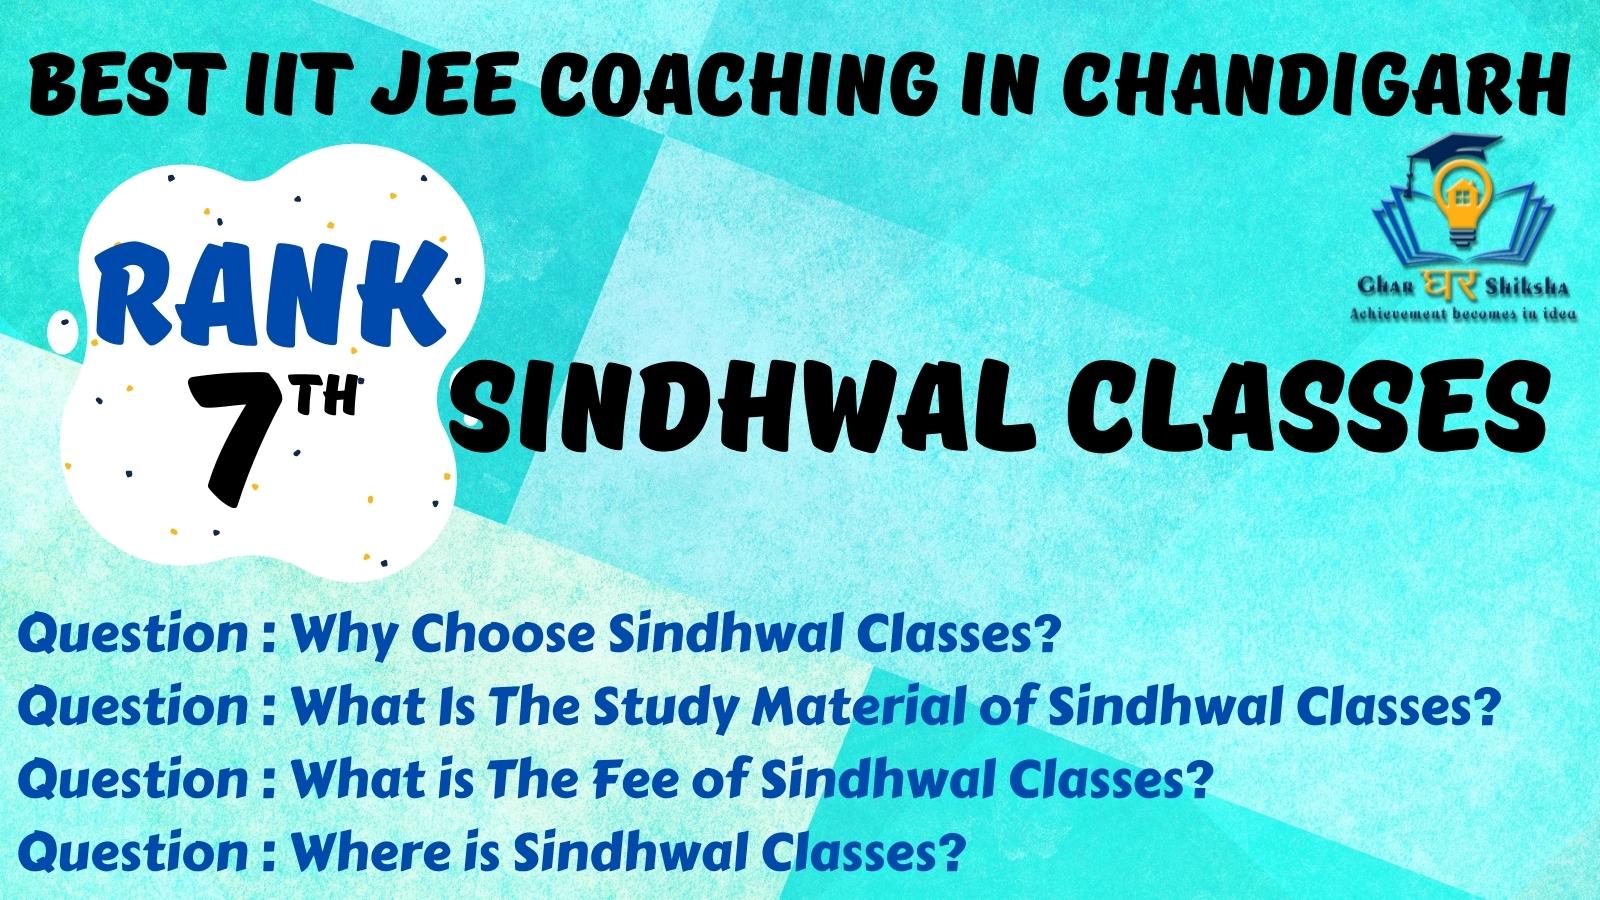 Top IIT JEE Coaching in Chandigarh